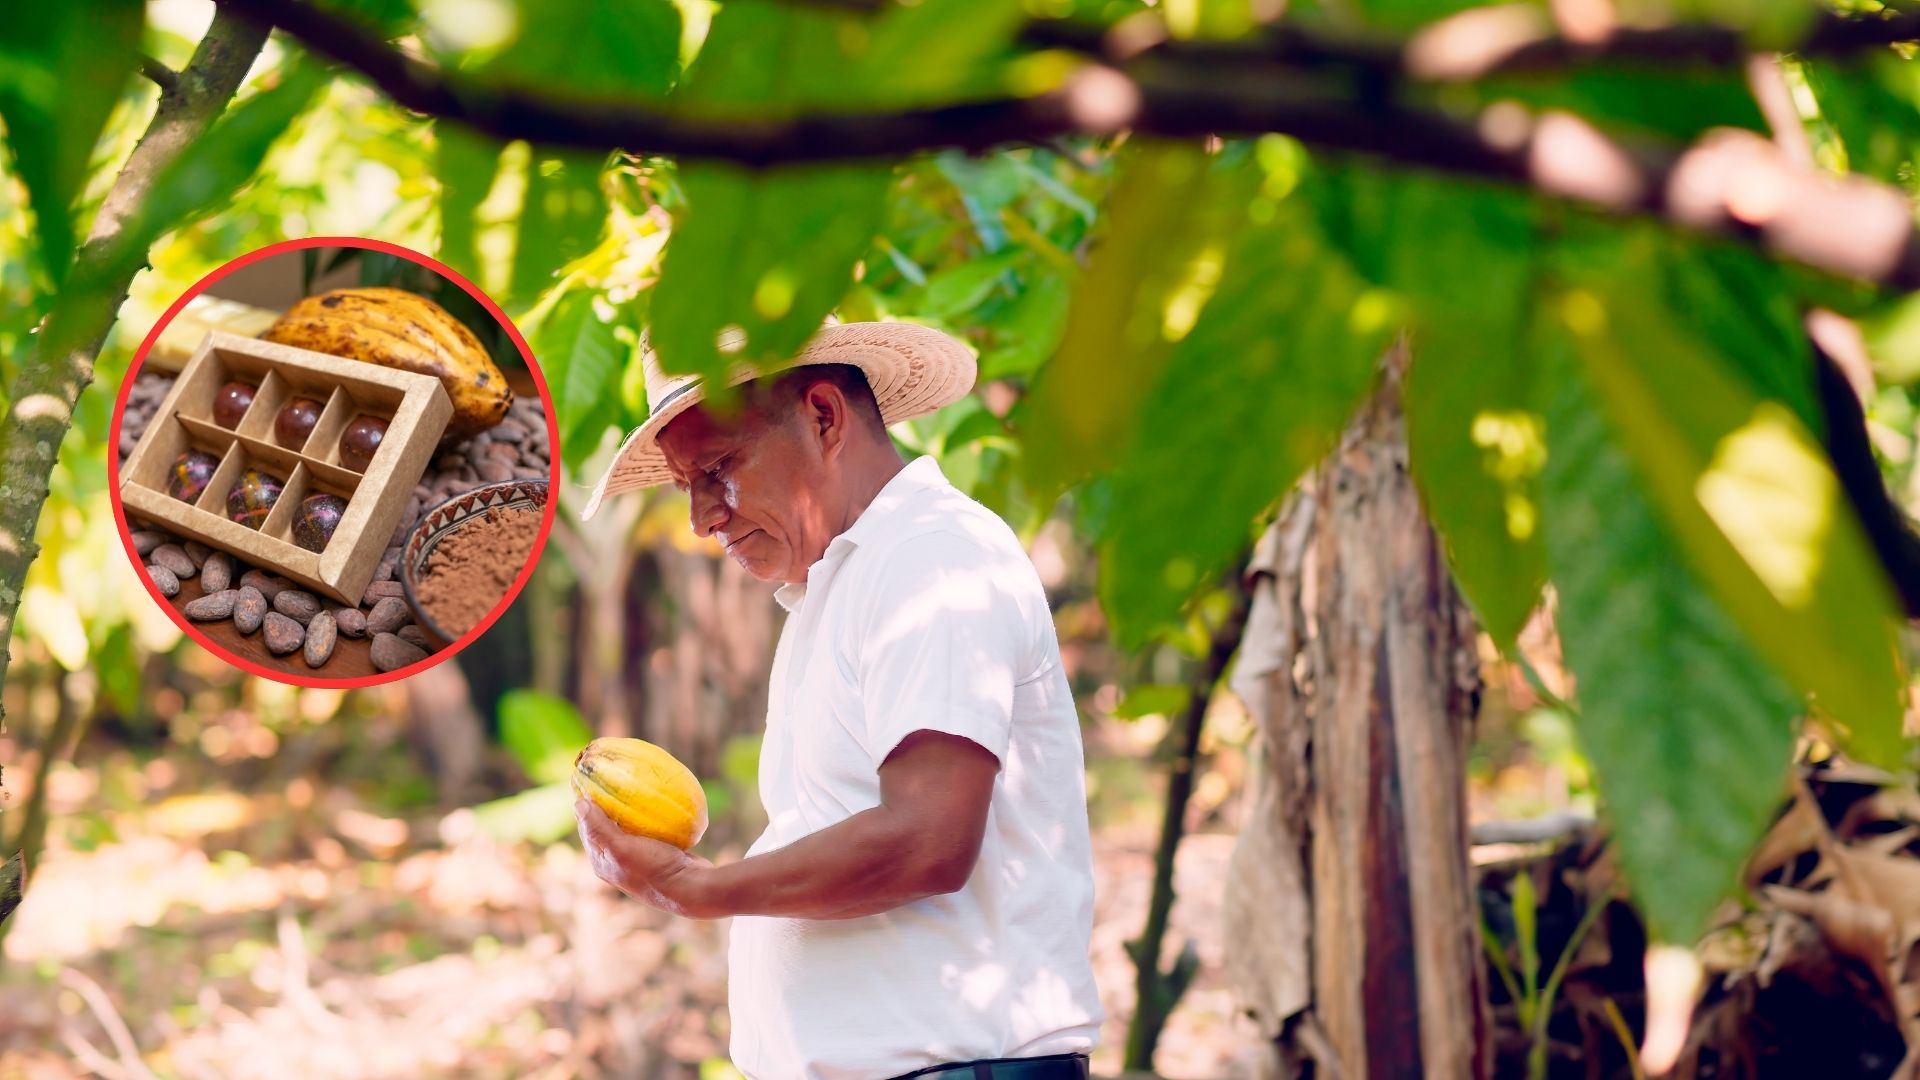 Descubren especie similar al cacao cerca a Colombia: salvará futuro de chocolate